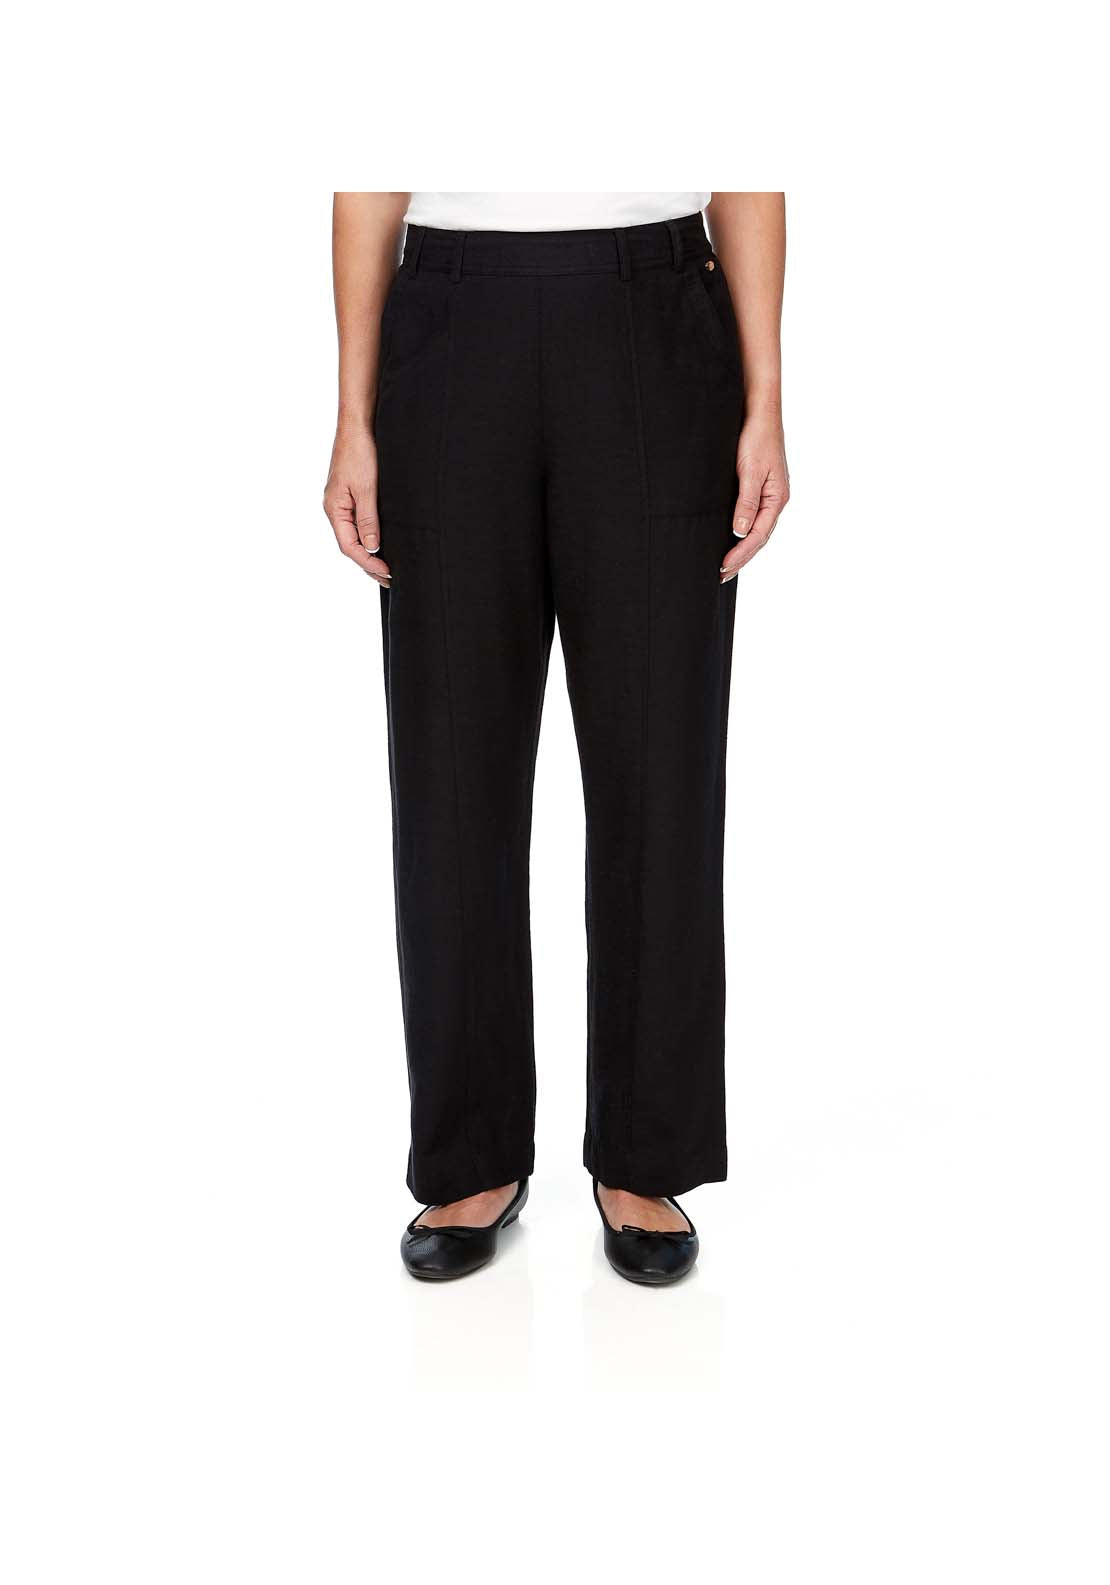 Tigiwear Linen Blend Black Trousers 1 Shaws Department Stores